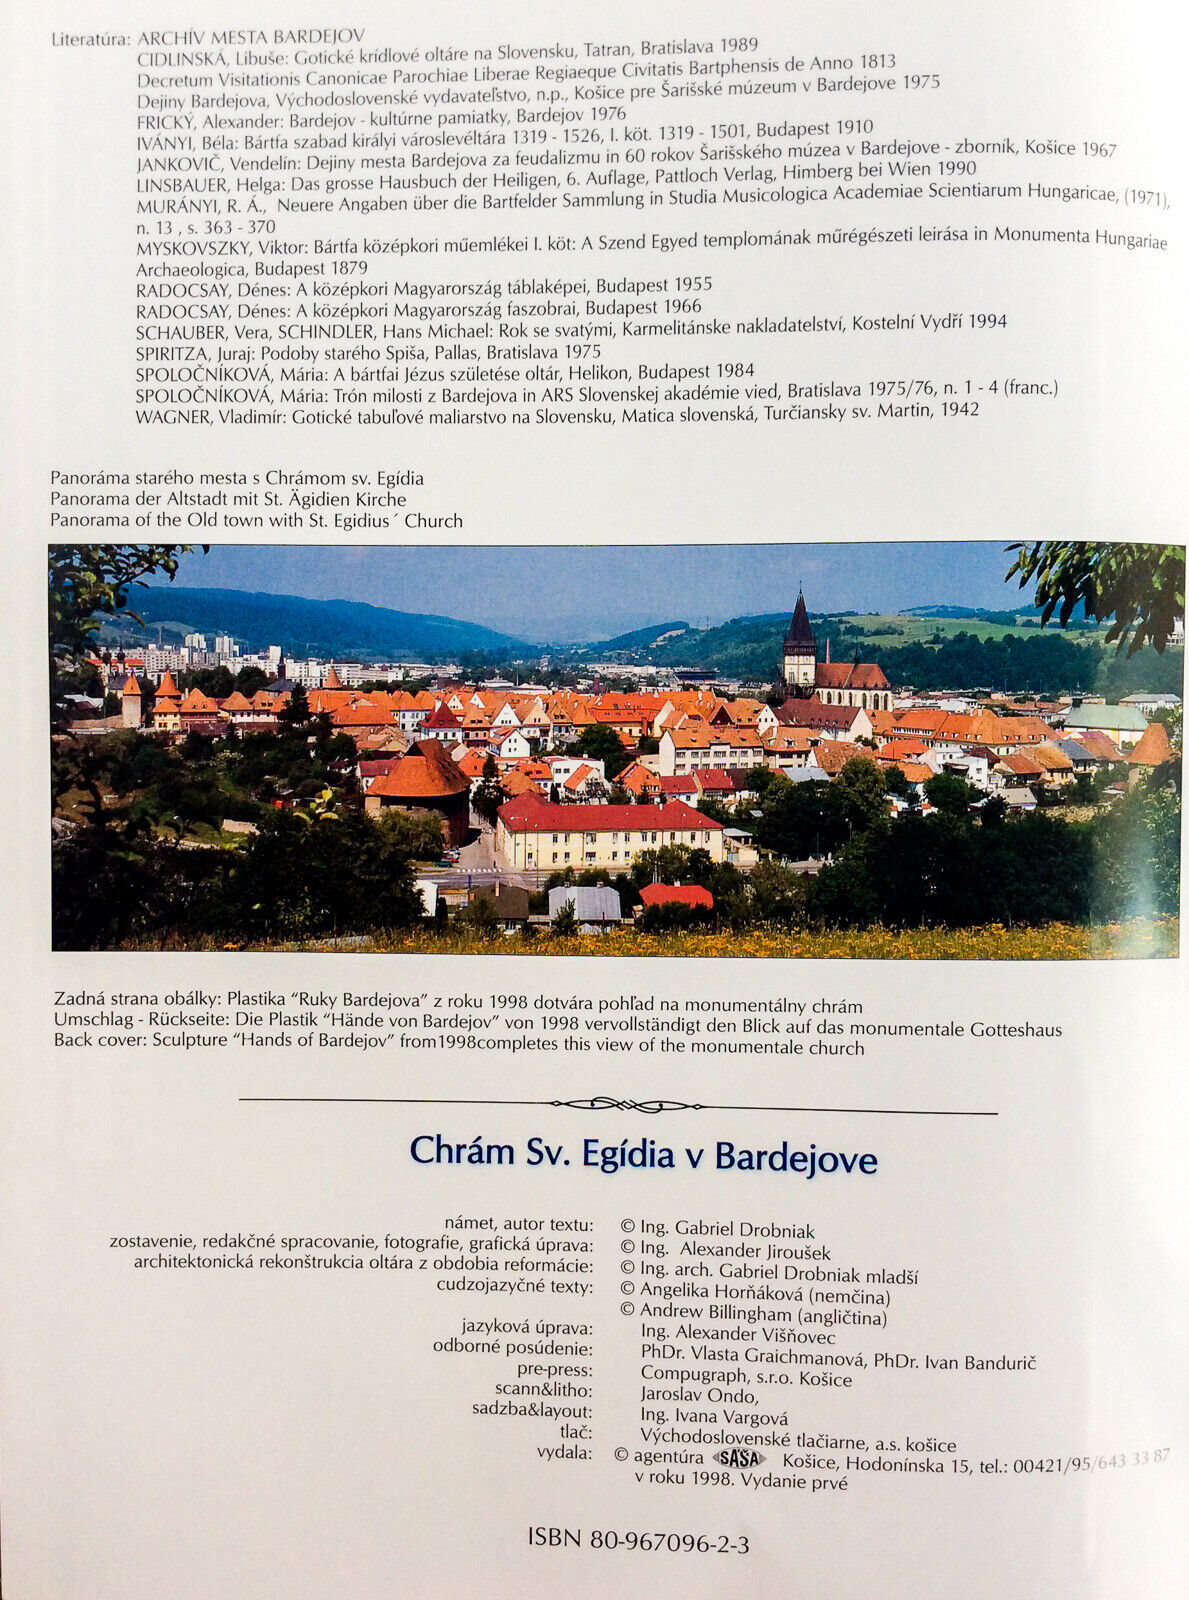 St. Egidius' Church in Bardejov Slovakia Hardcover Book in English & Slovak Rare